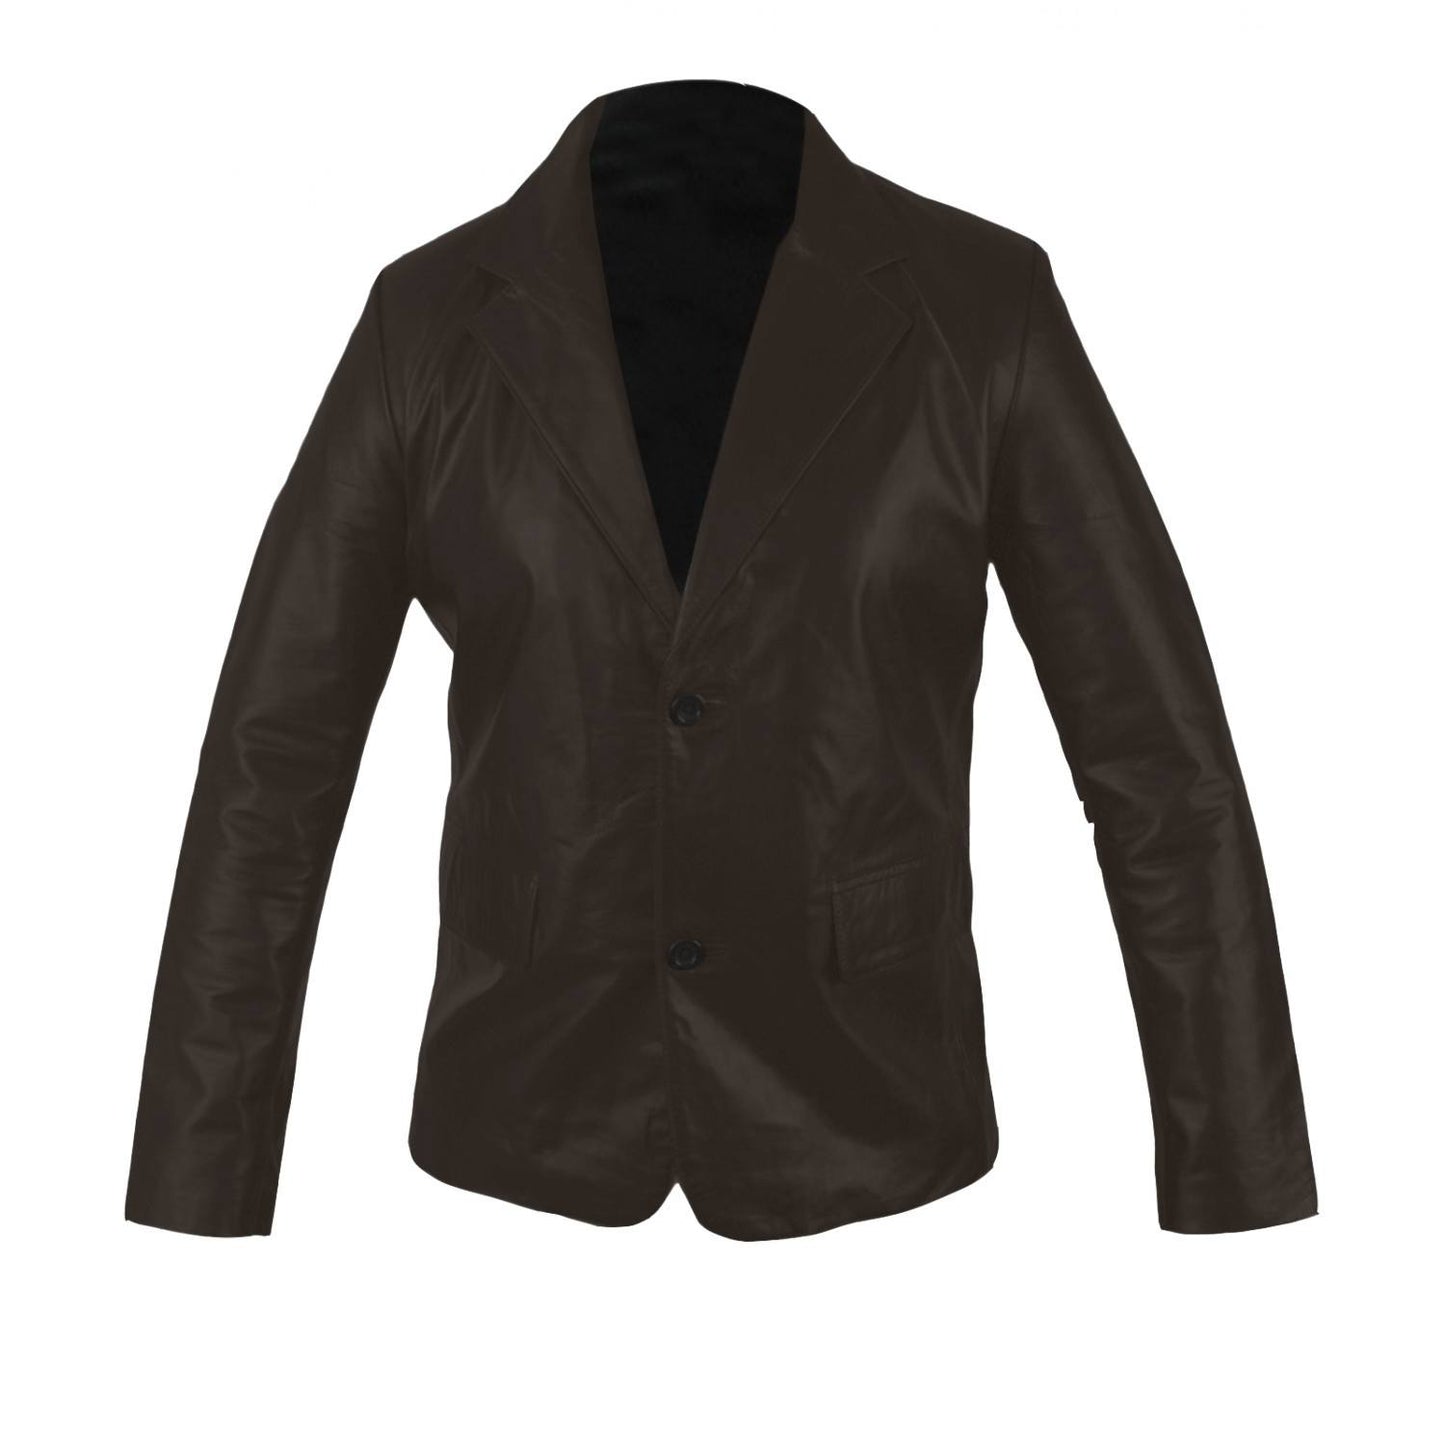 Leather Jackets Hub Men's 2 Button Stylish Blazer Cow Leather Coat (Black, Officer Jacket) - 1501793